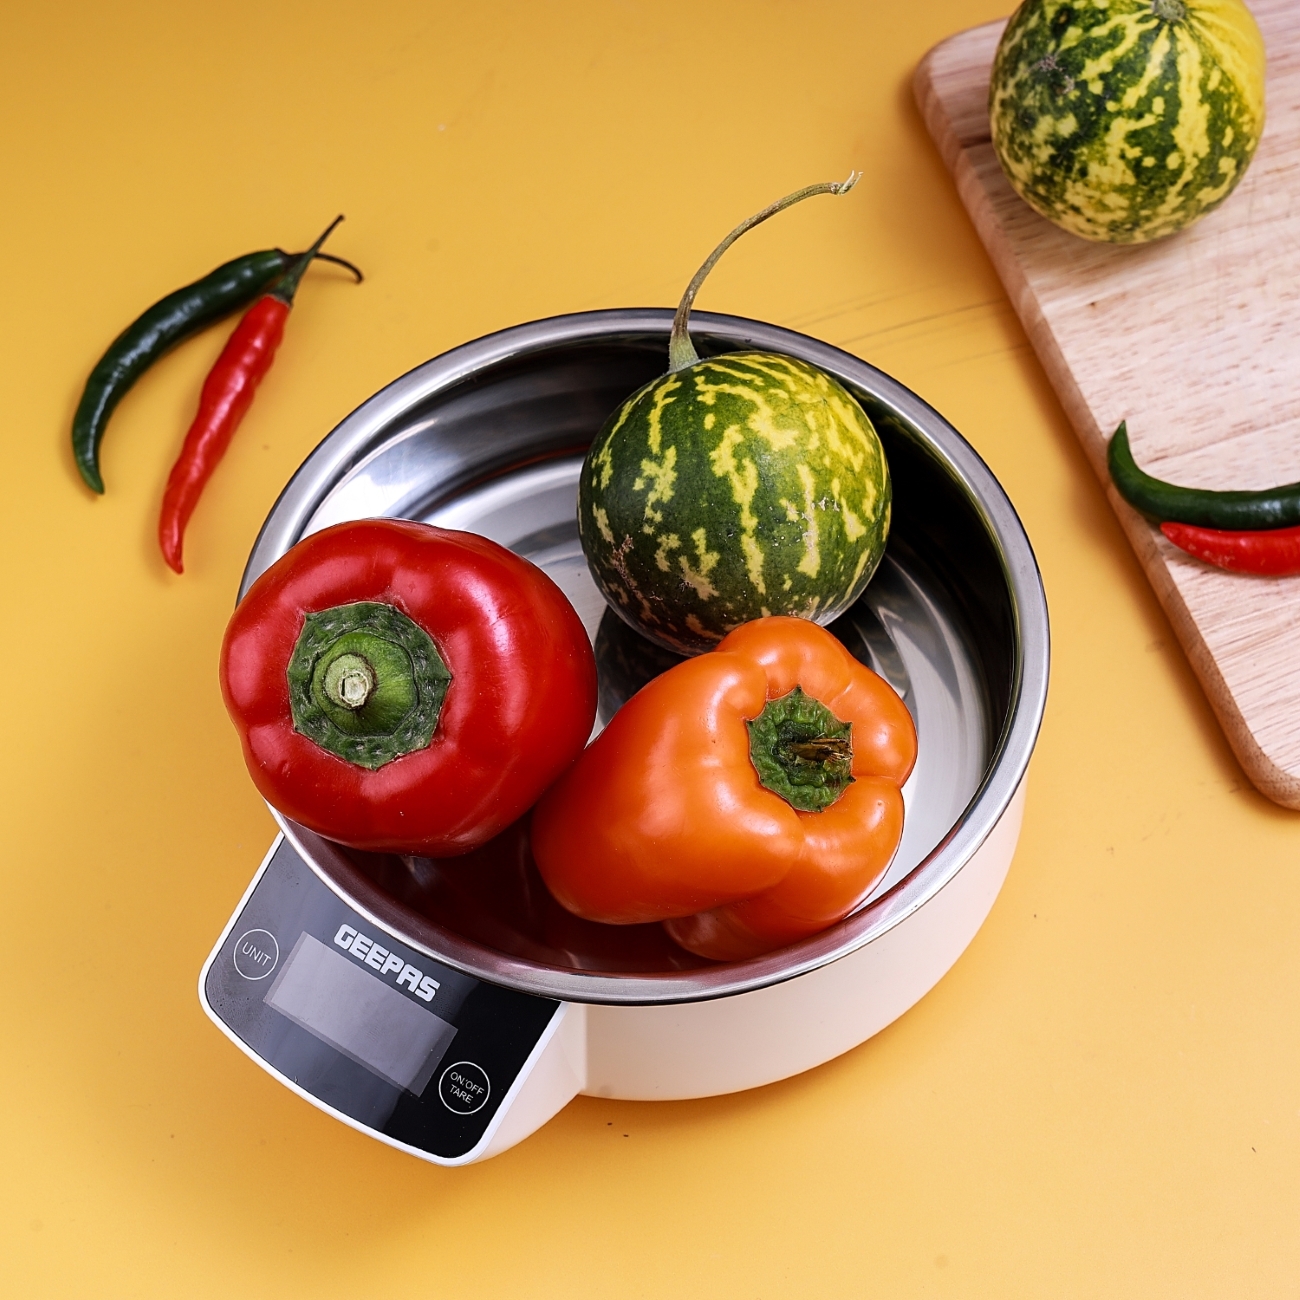 ميزان أكل طعام 5 كيلو من جيباس Geepas Digital Kitchen Scale